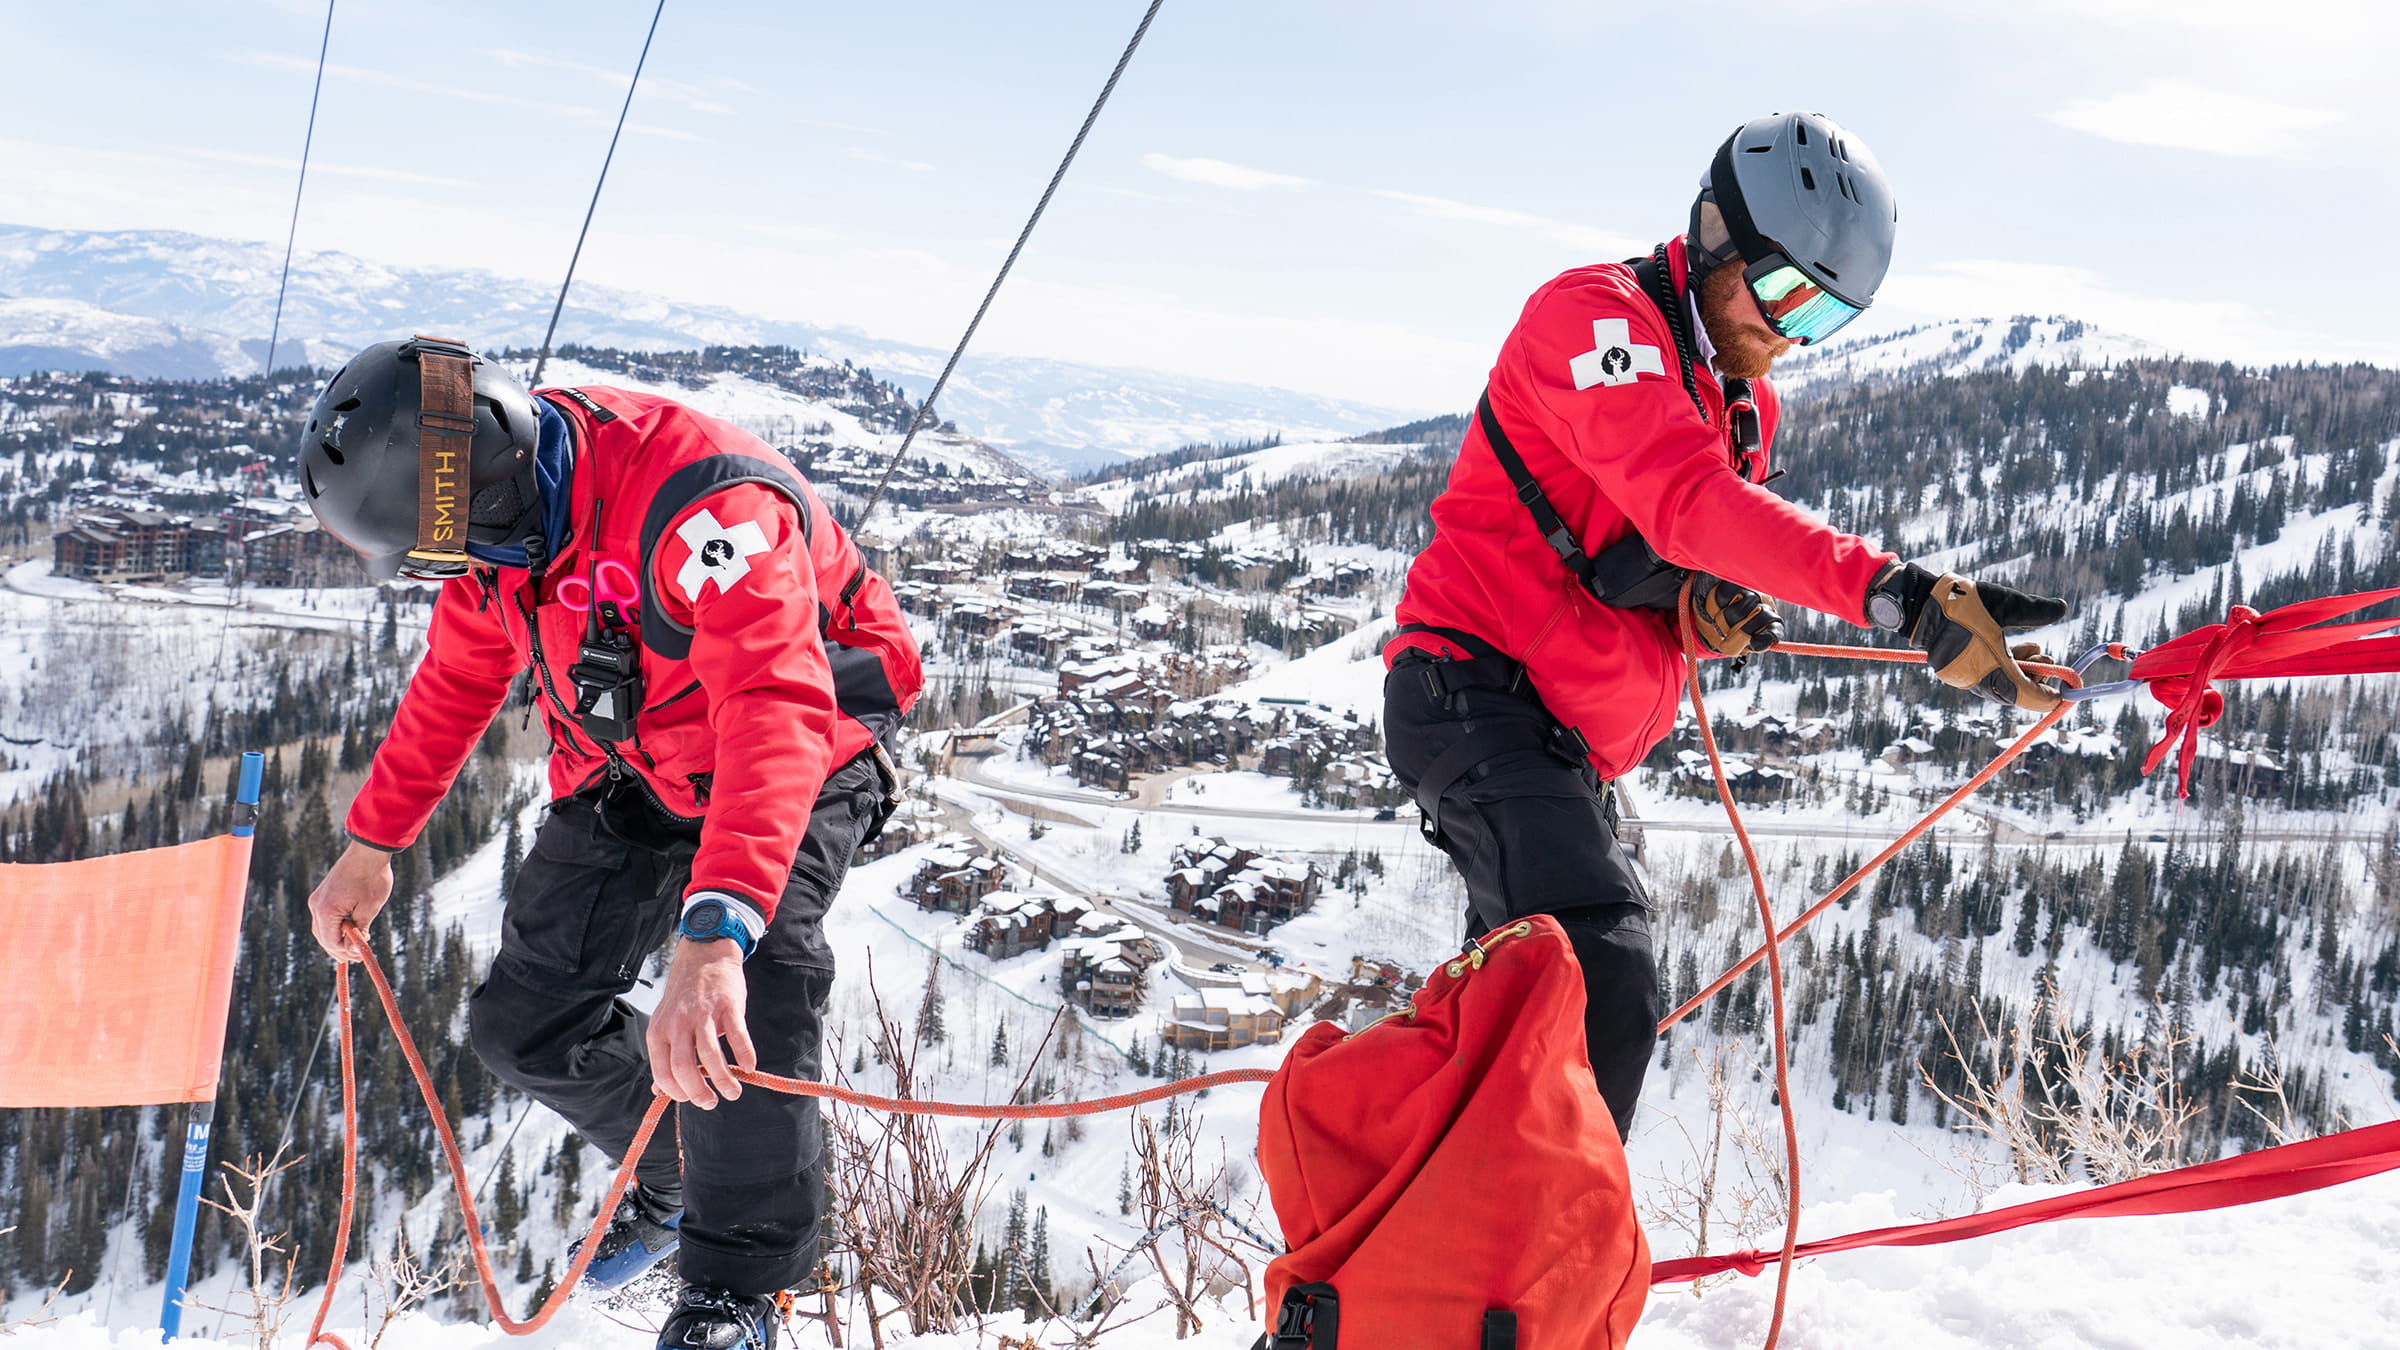 Two ski patrollers preparing for safety training at Deer Valley Resort.